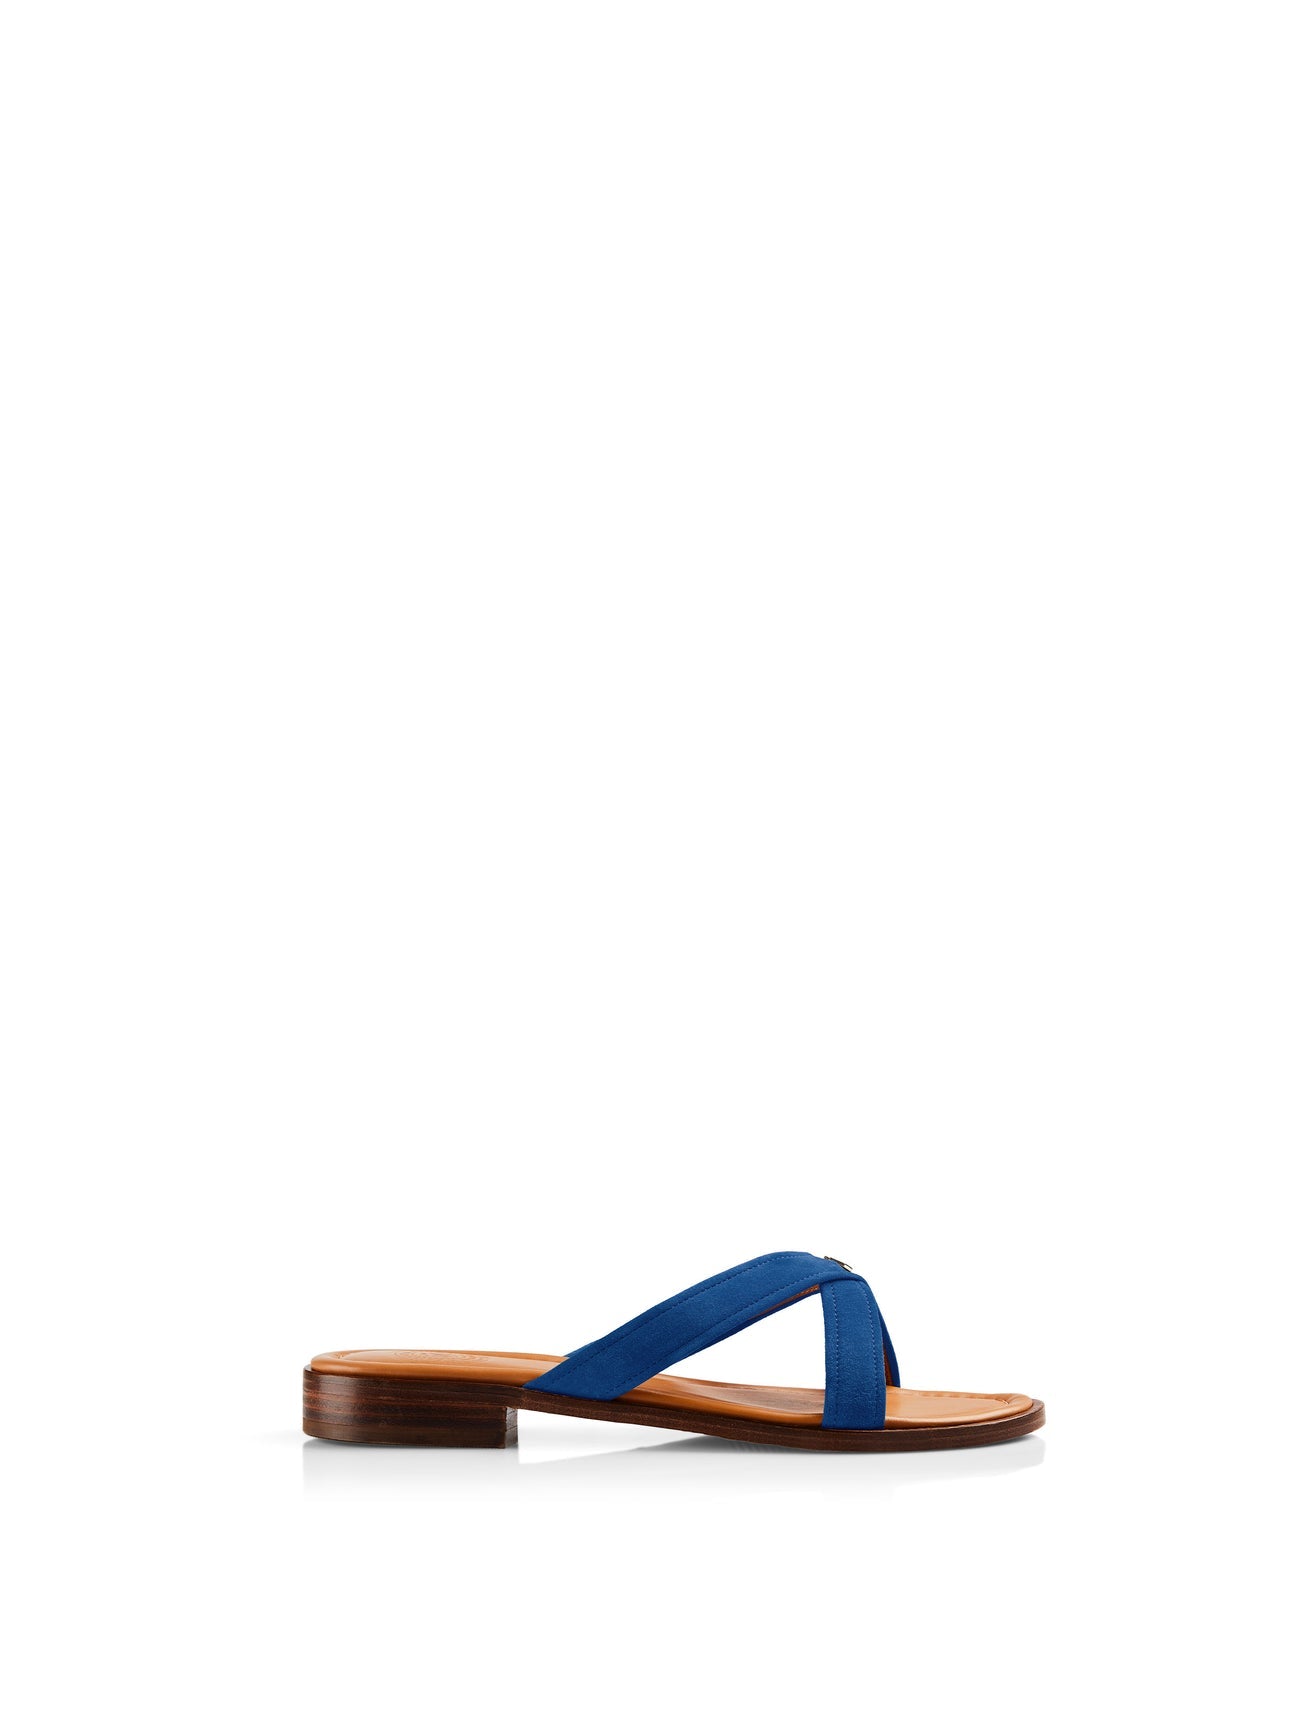 Holkham
Women's Sandal - Porto Blue Suede